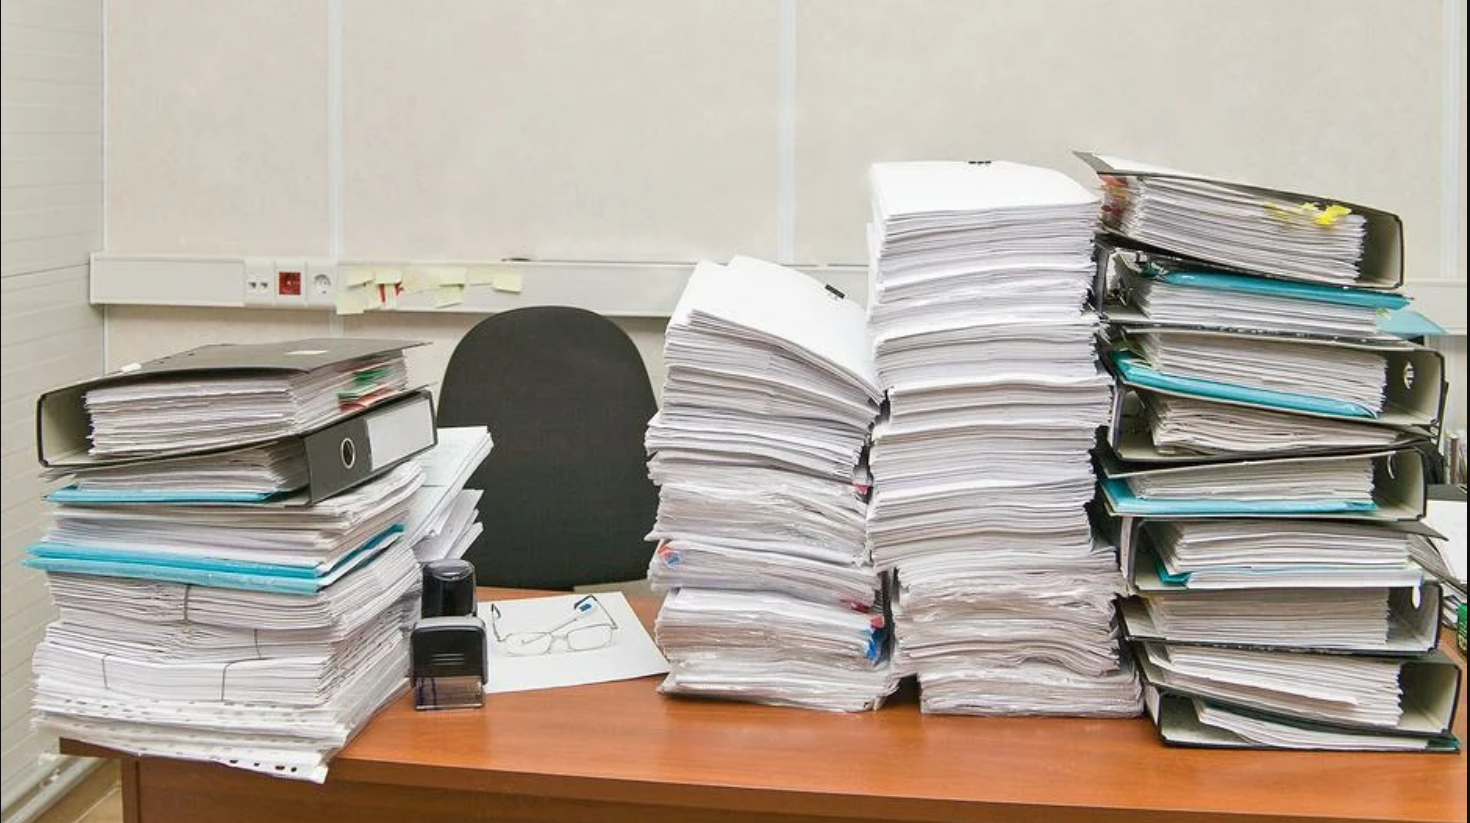 Много бумаг на столе. Стопка бумаг на столе. Куча бумаг на столе. Стол заваленный бумагами. Много бумаги.